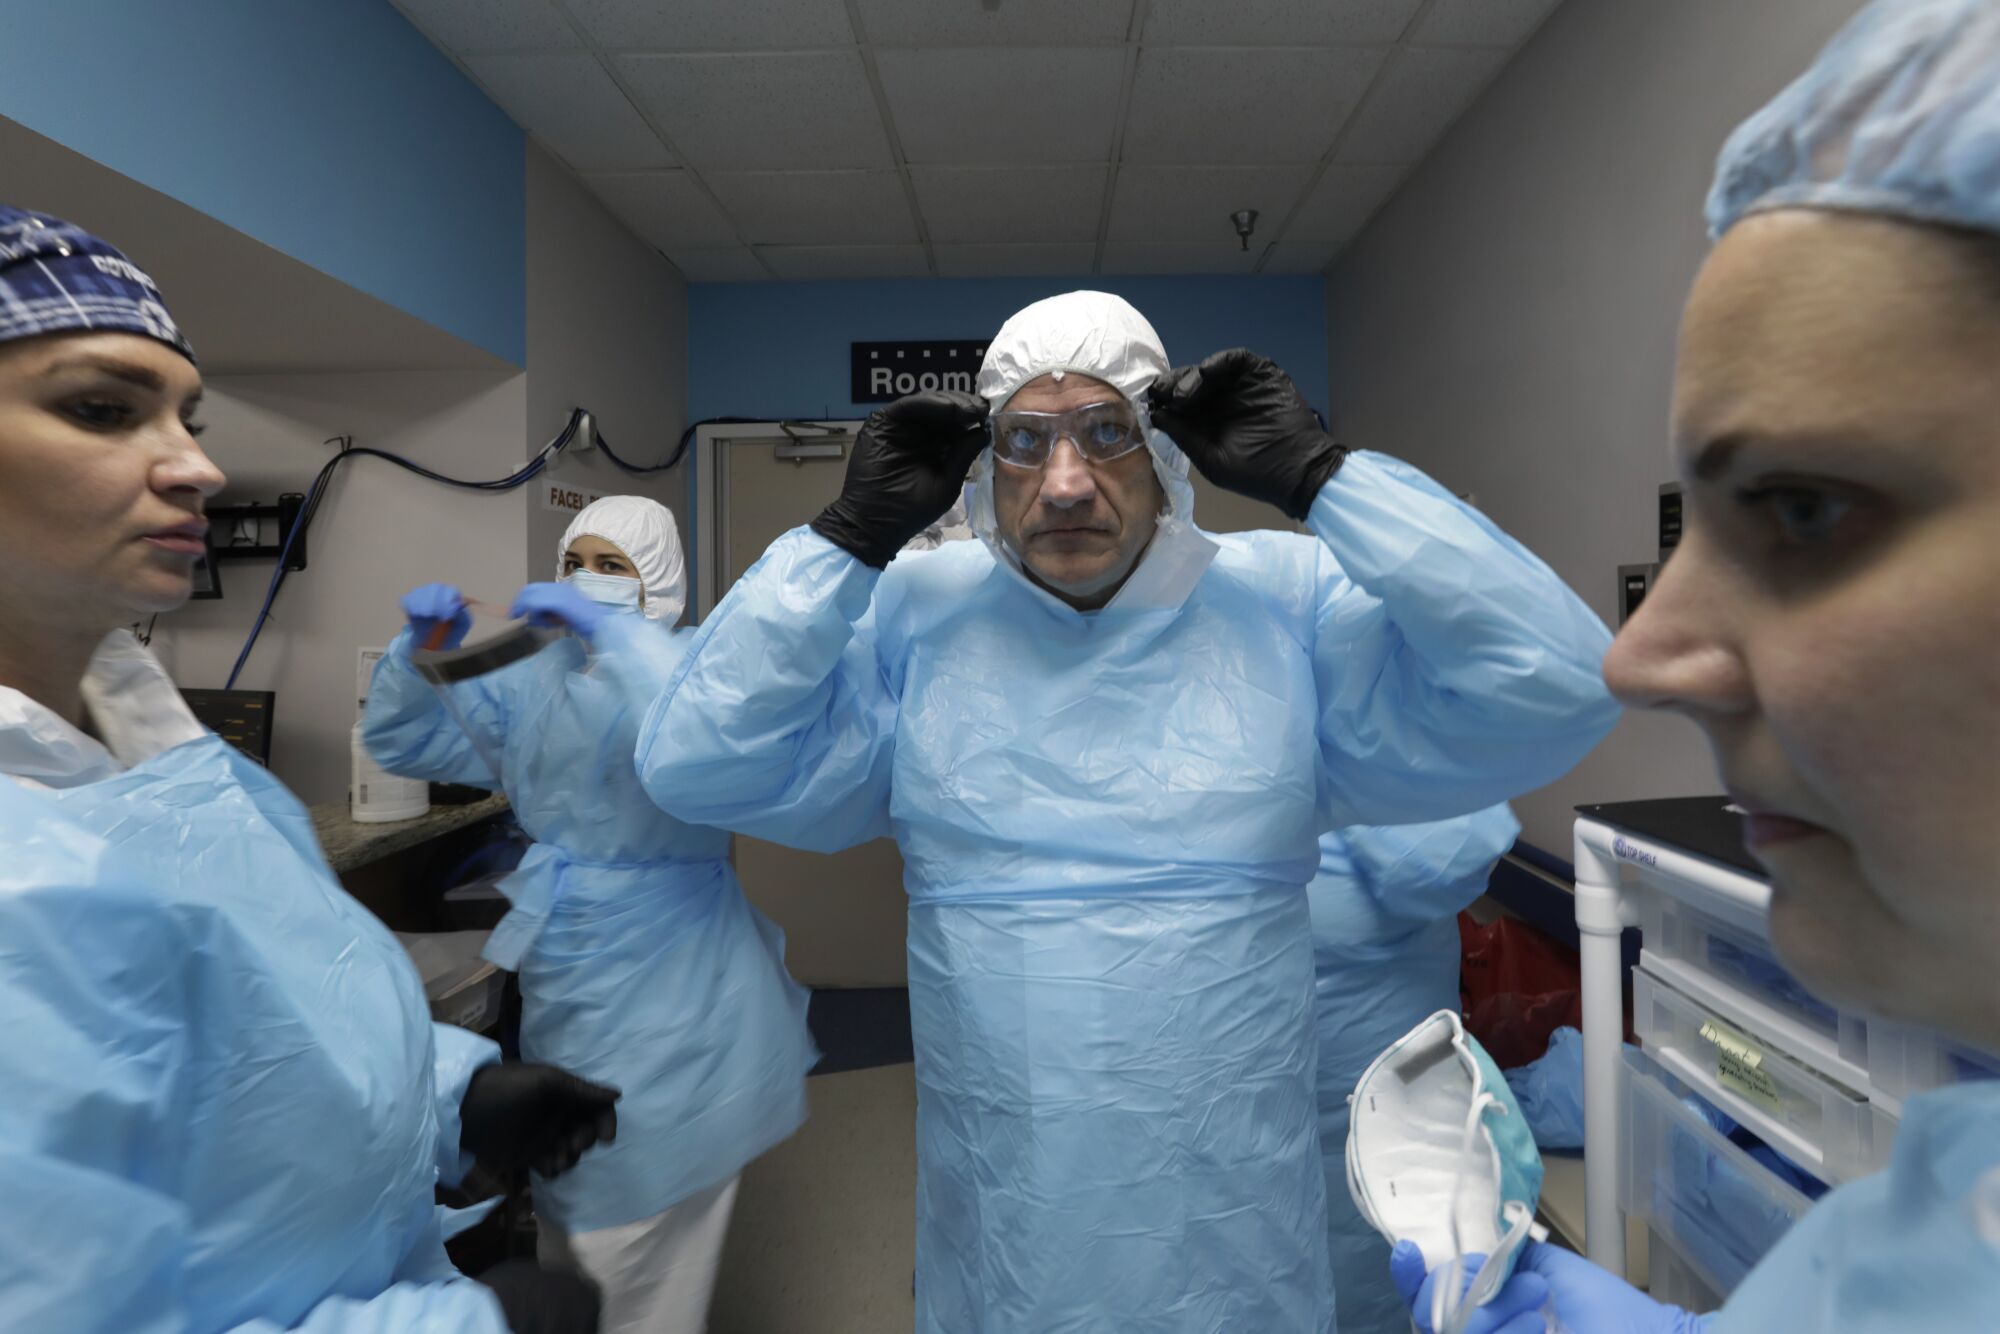 Dr. Joseph Varon, center, prepares to enter the COVID unit at United Memorial Medical Center with nurses Tanna Ingraham, left and Jerusha Harshman.